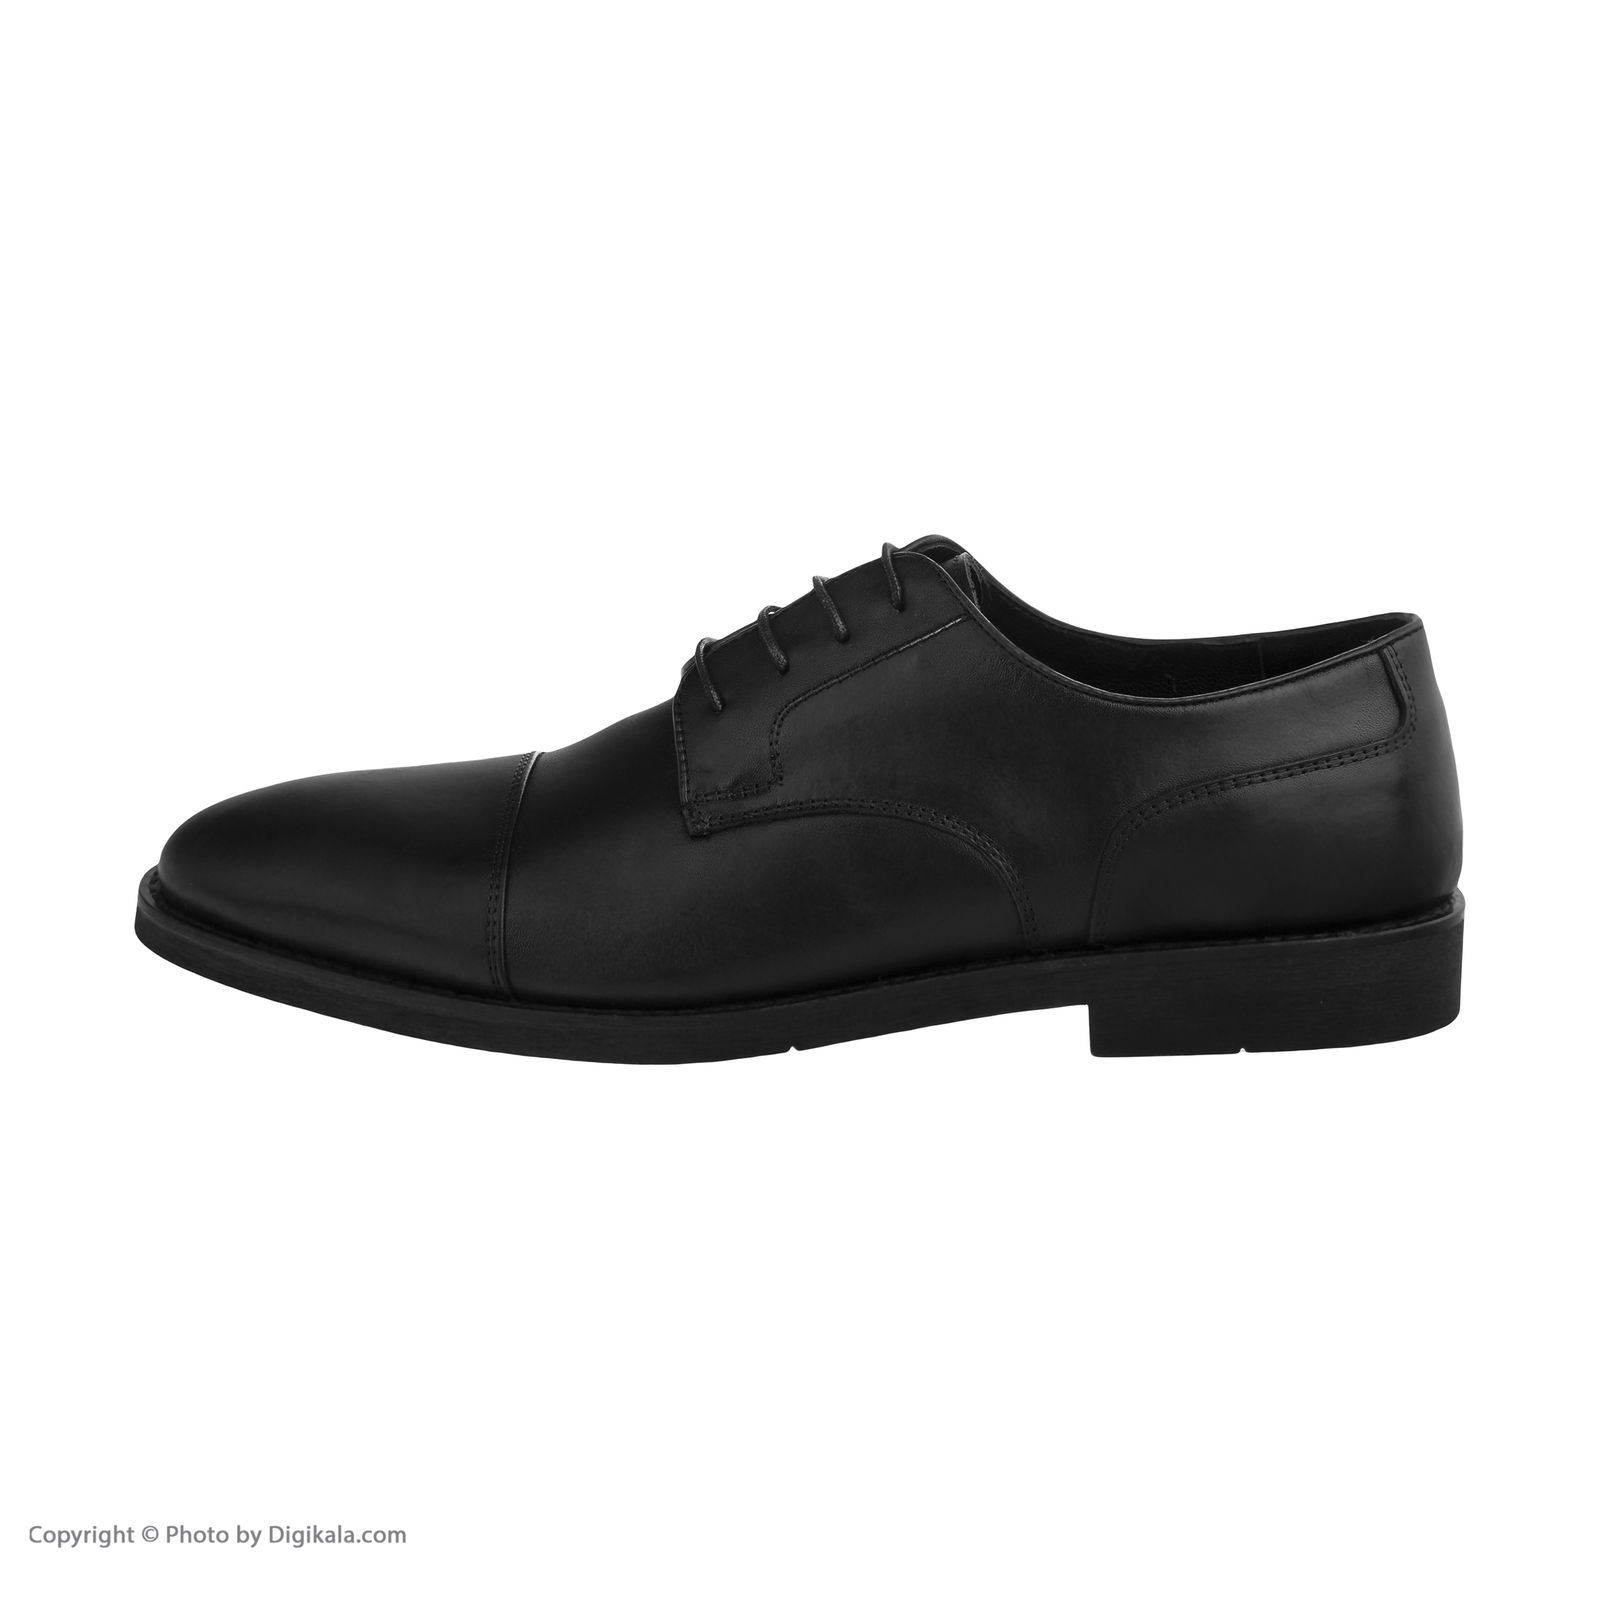  کفش مردانه شیفر مدل 7253E503101 -  - 2